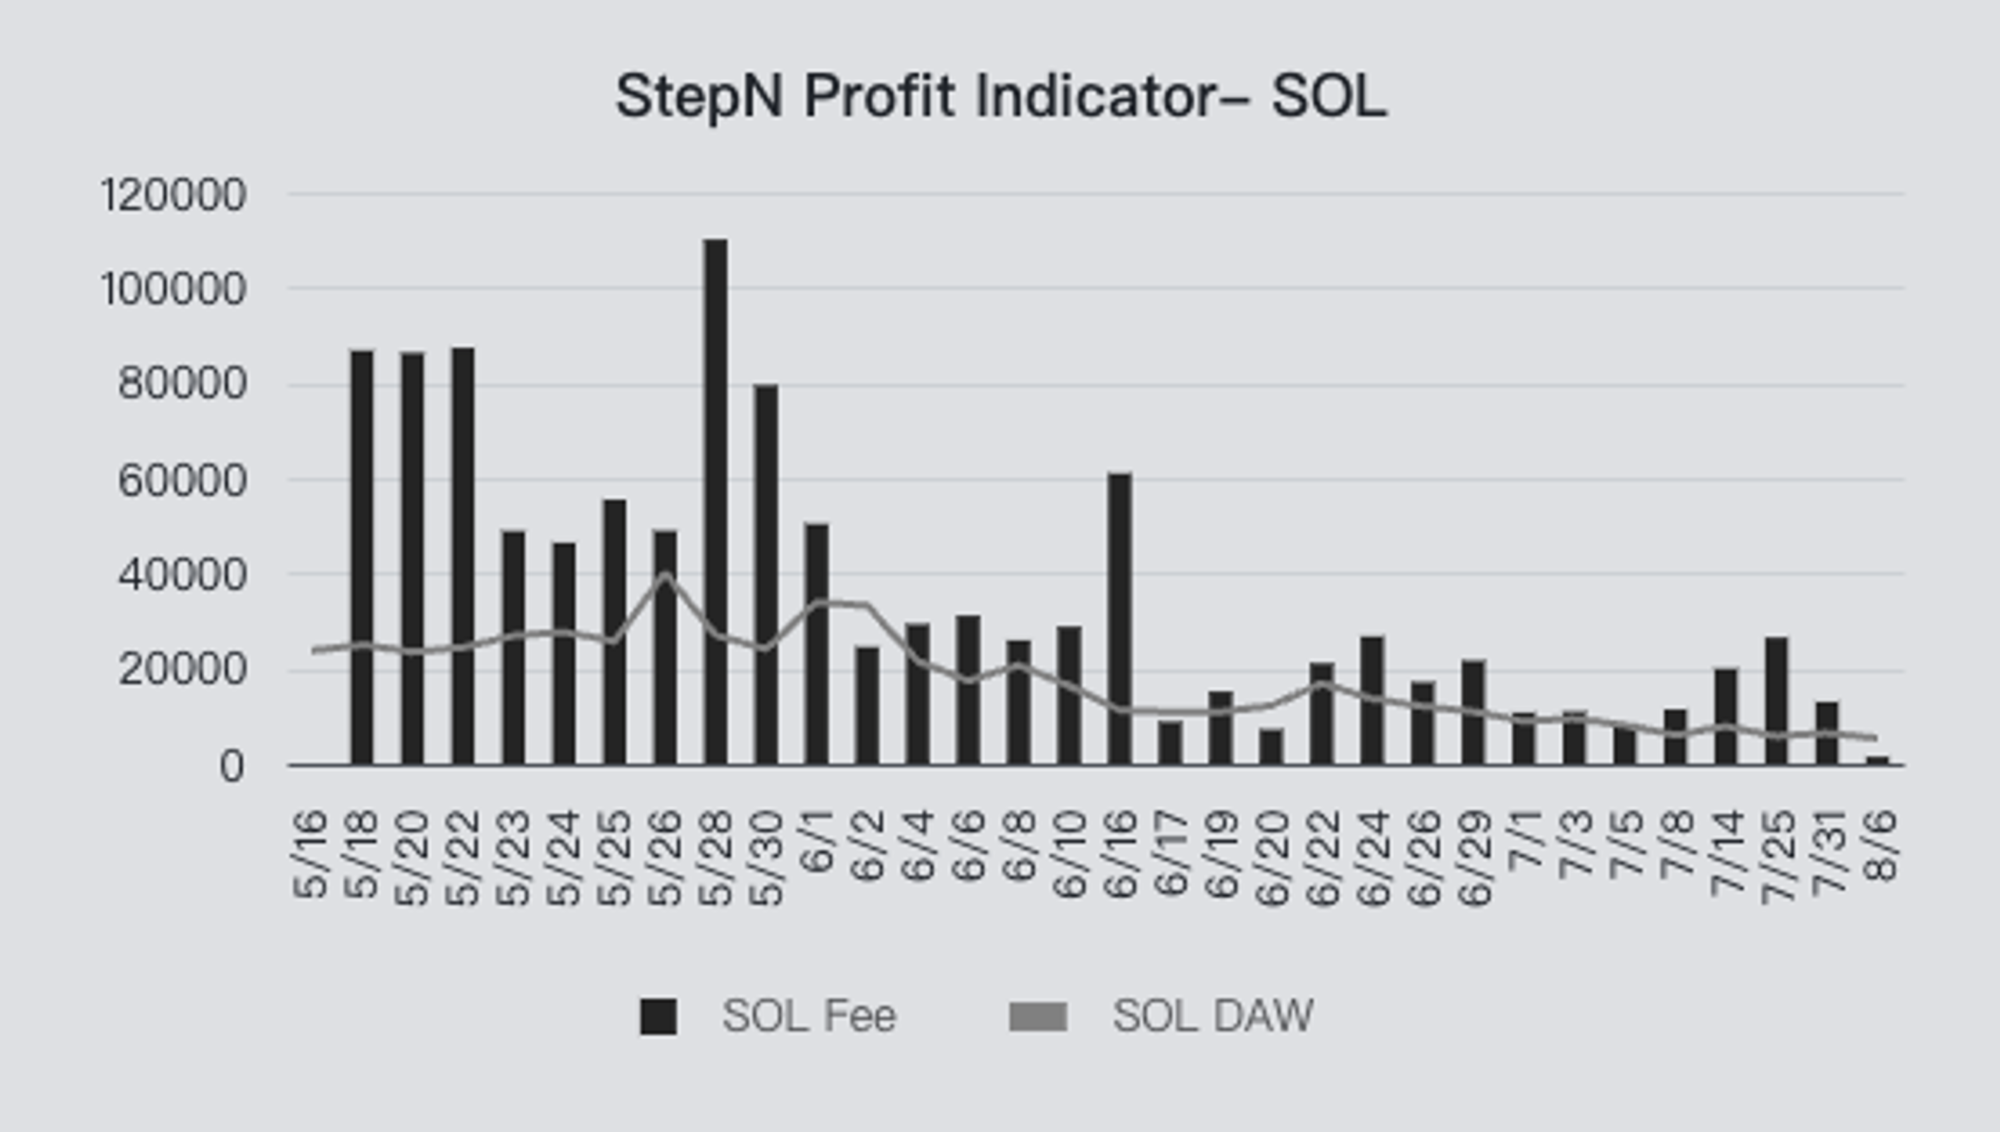 Stepn Profit Indicator - SOL